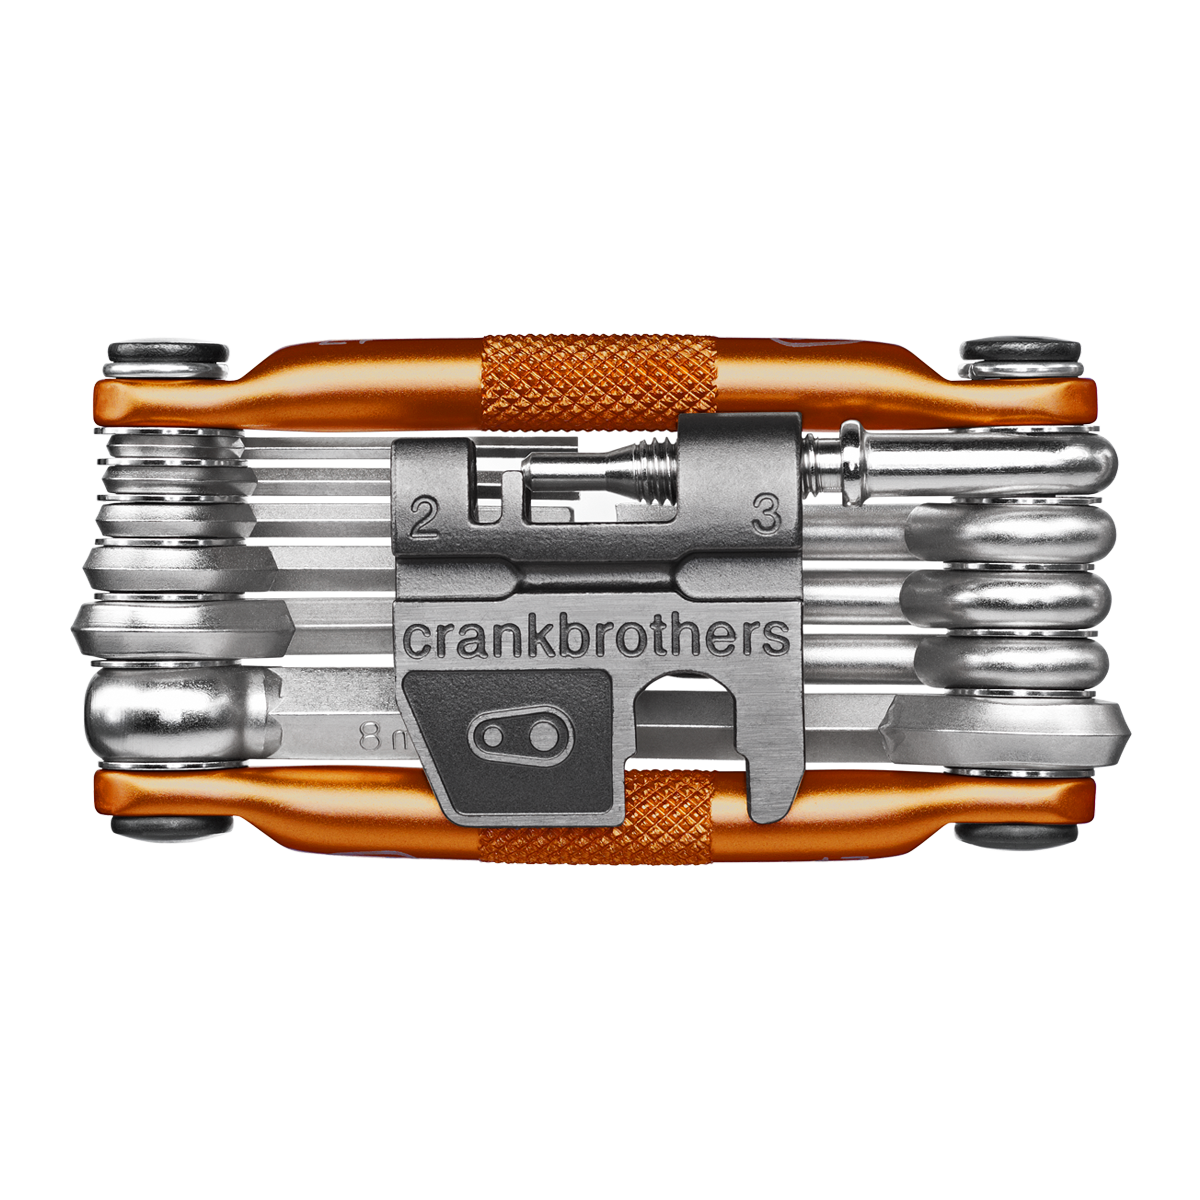 Limited Edition Crankbrothers M-Series Multi Tools Get Colorful - Bikerumor